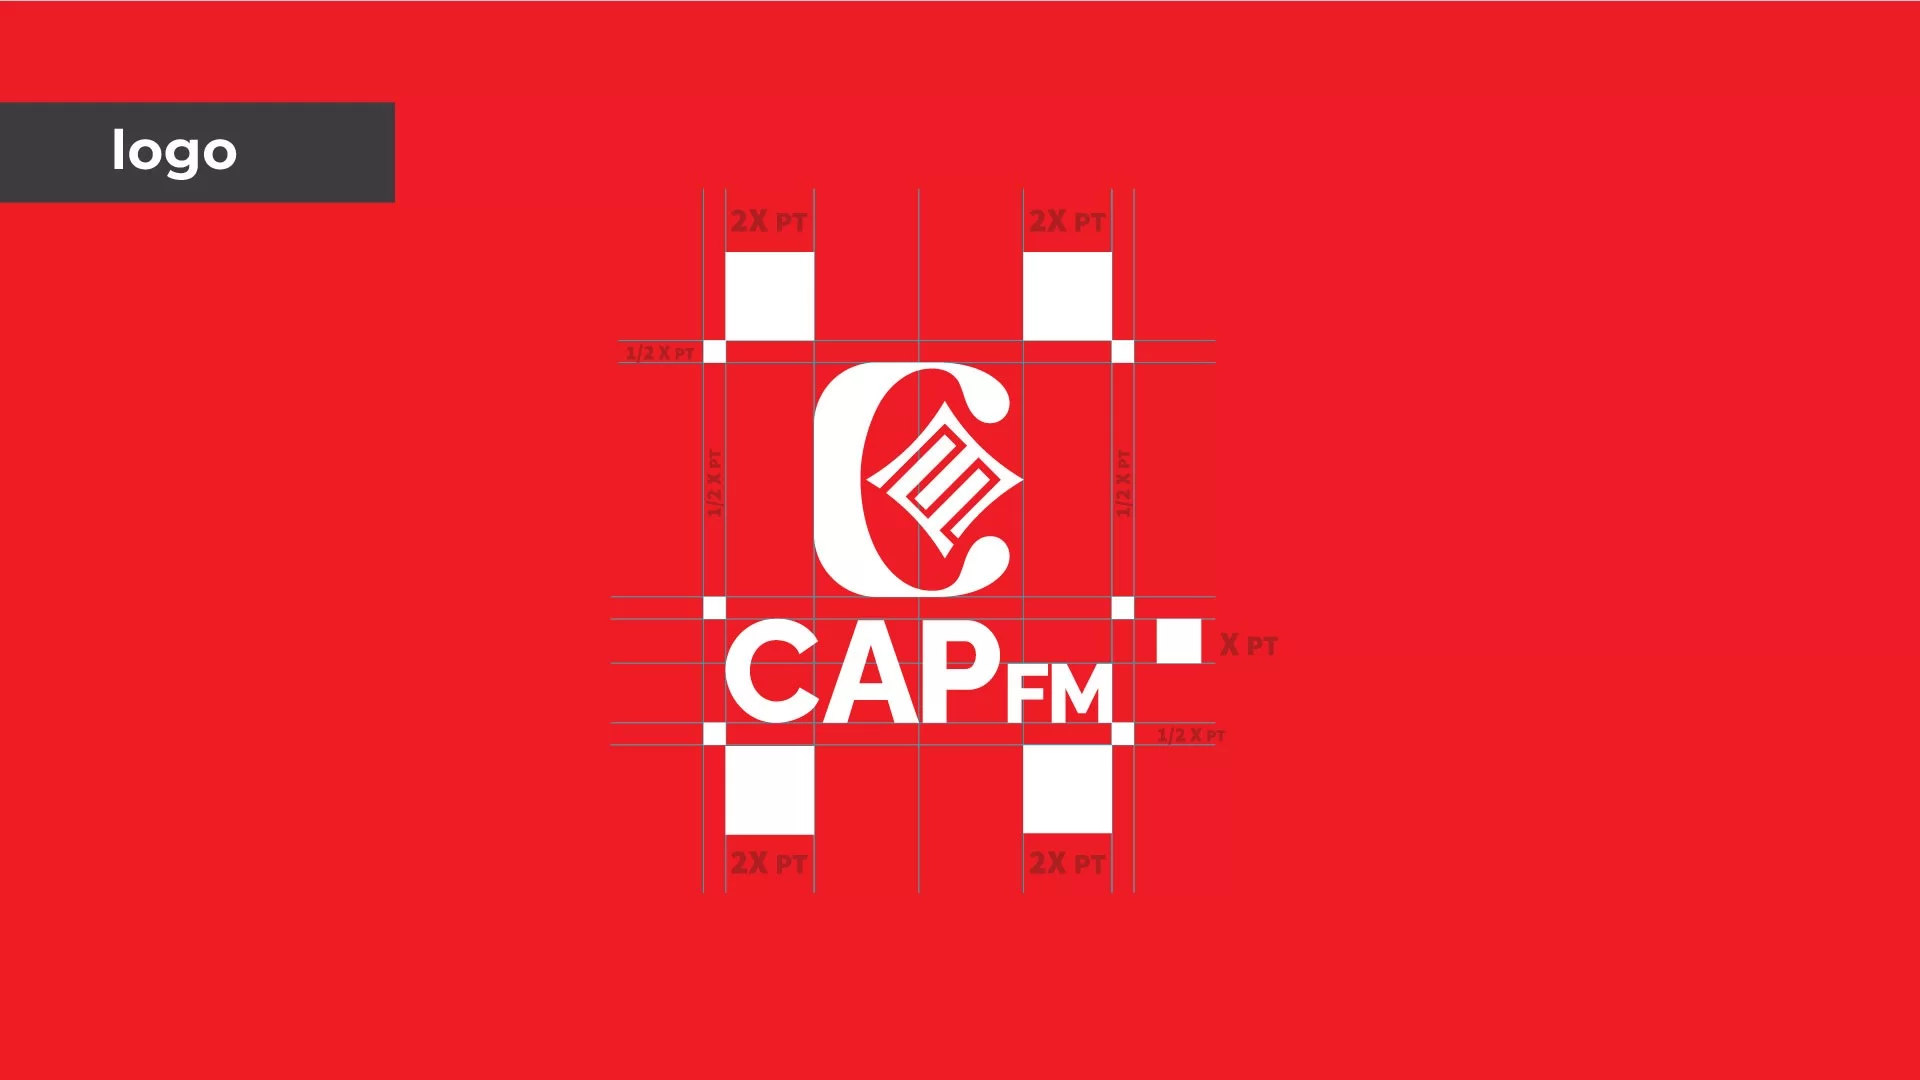 capital fm branding11